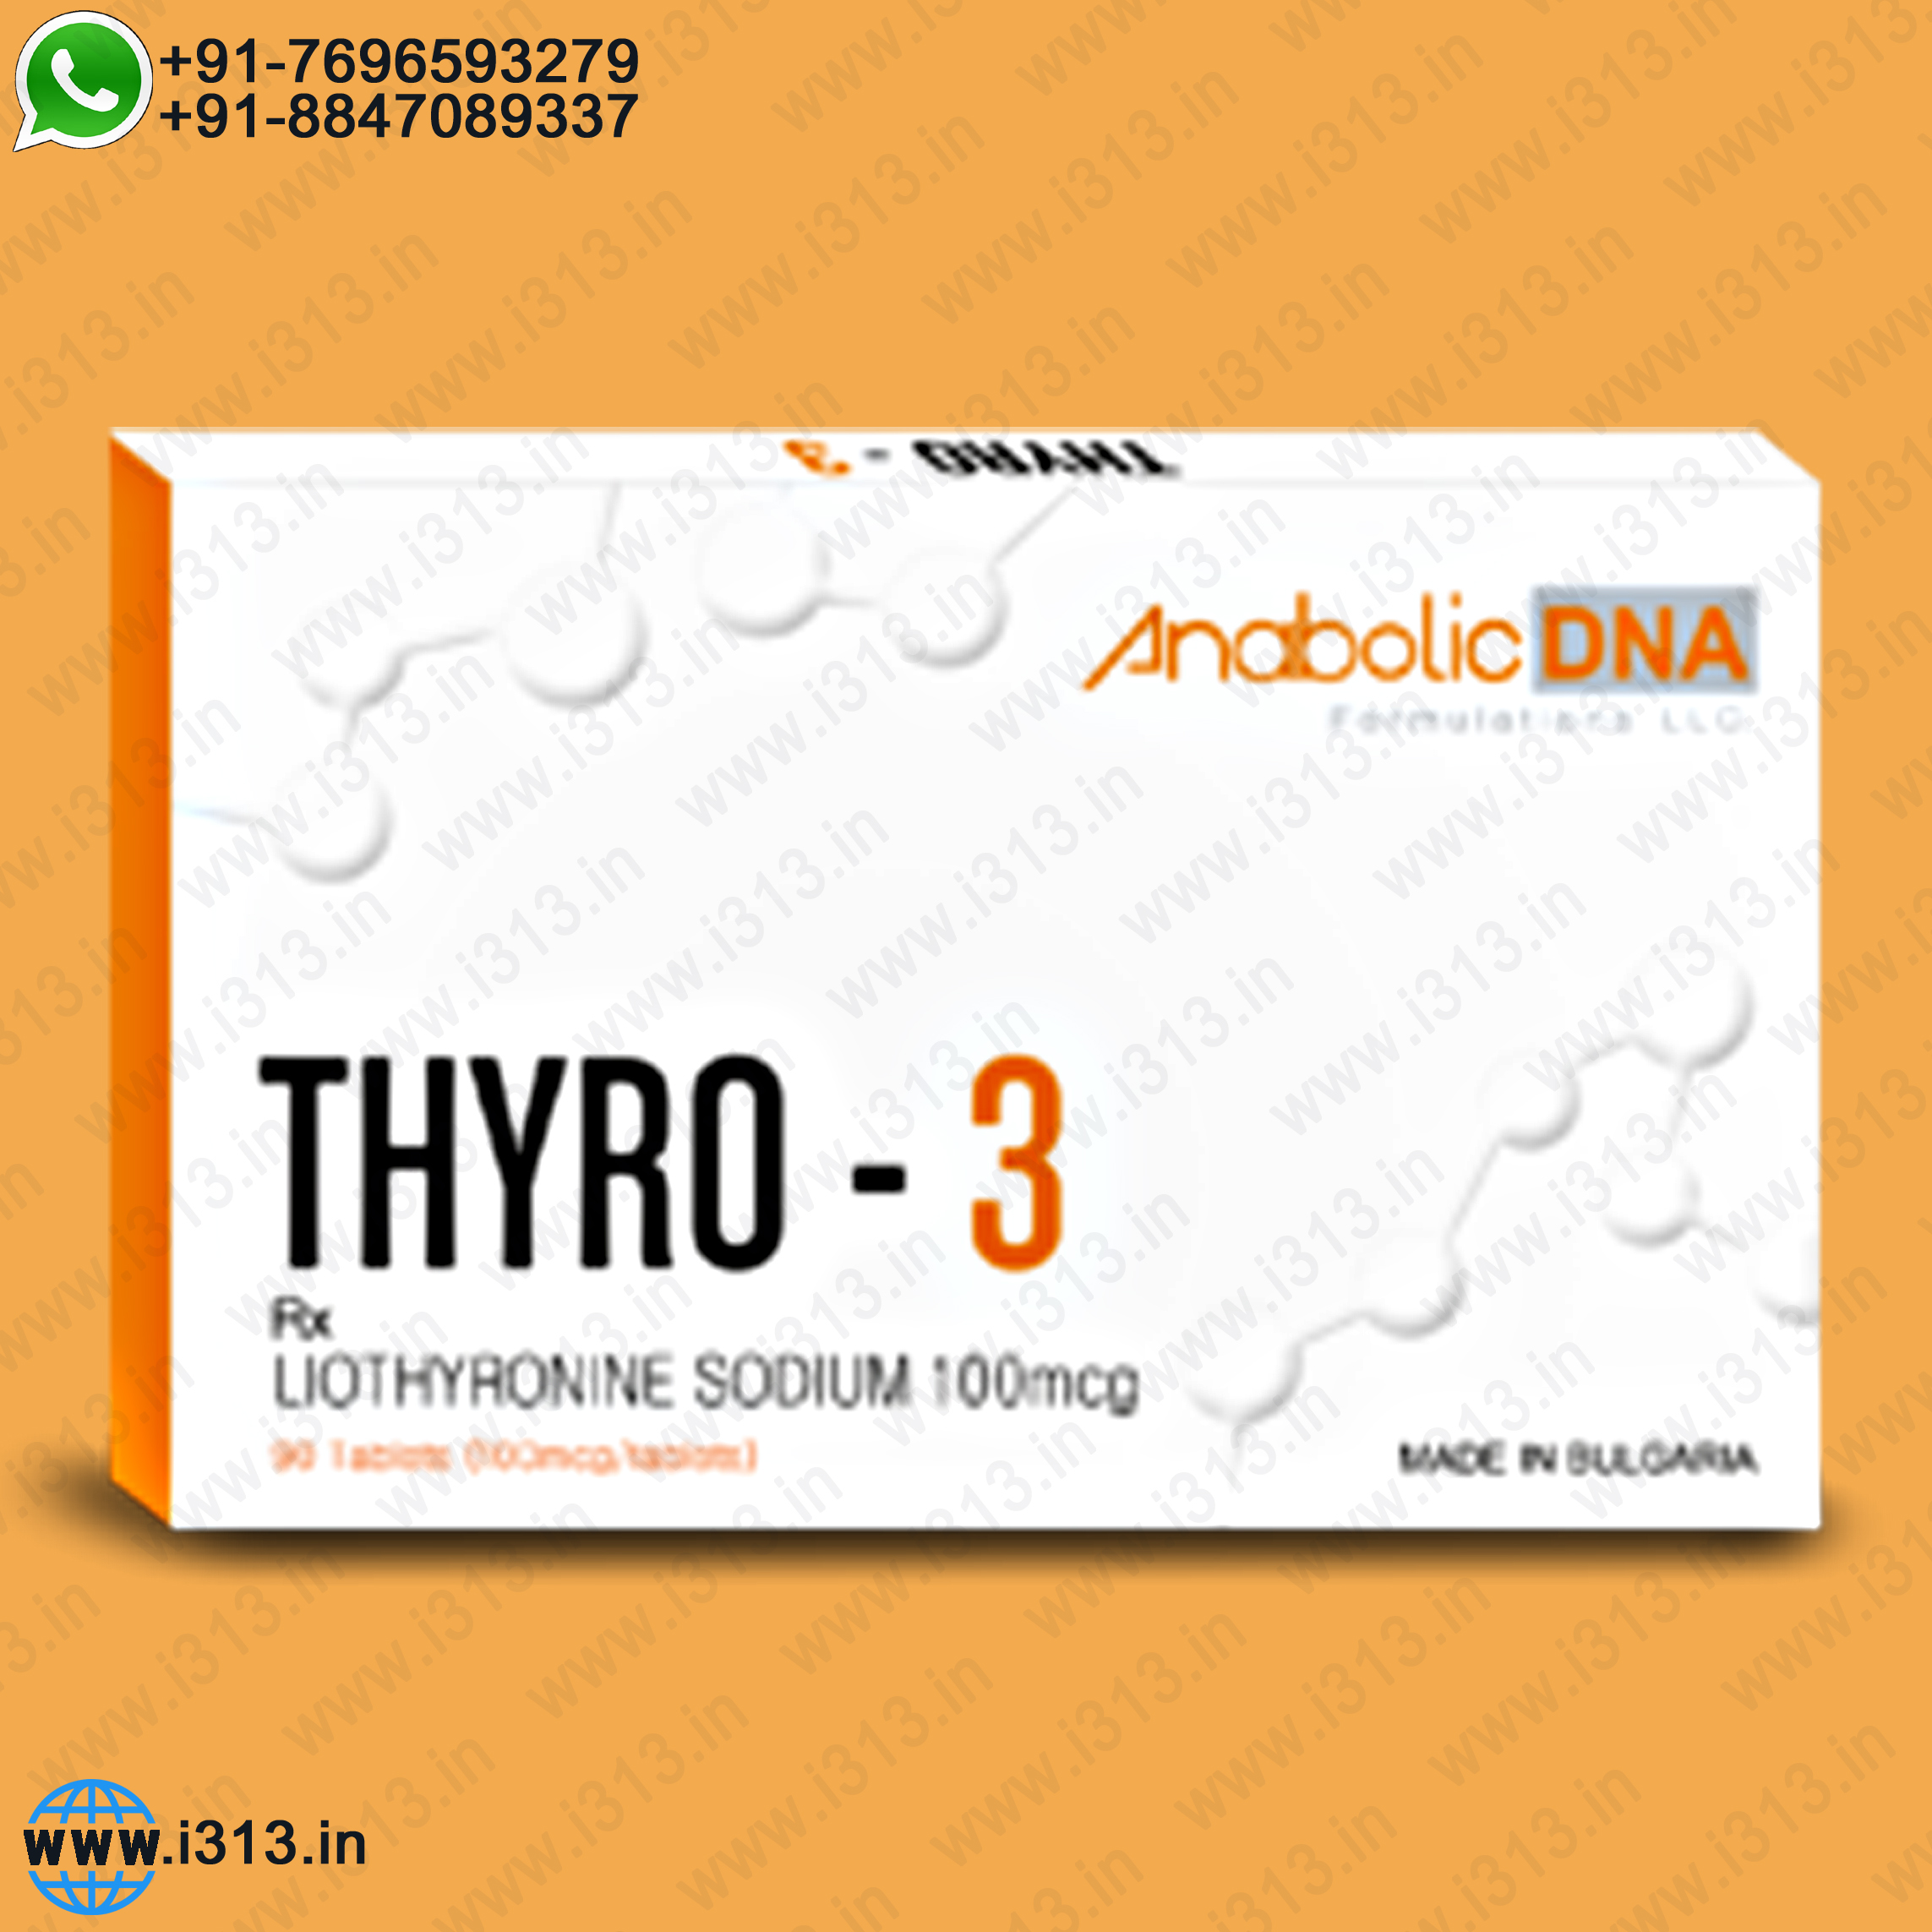 Anabolic DNA Thyro-3